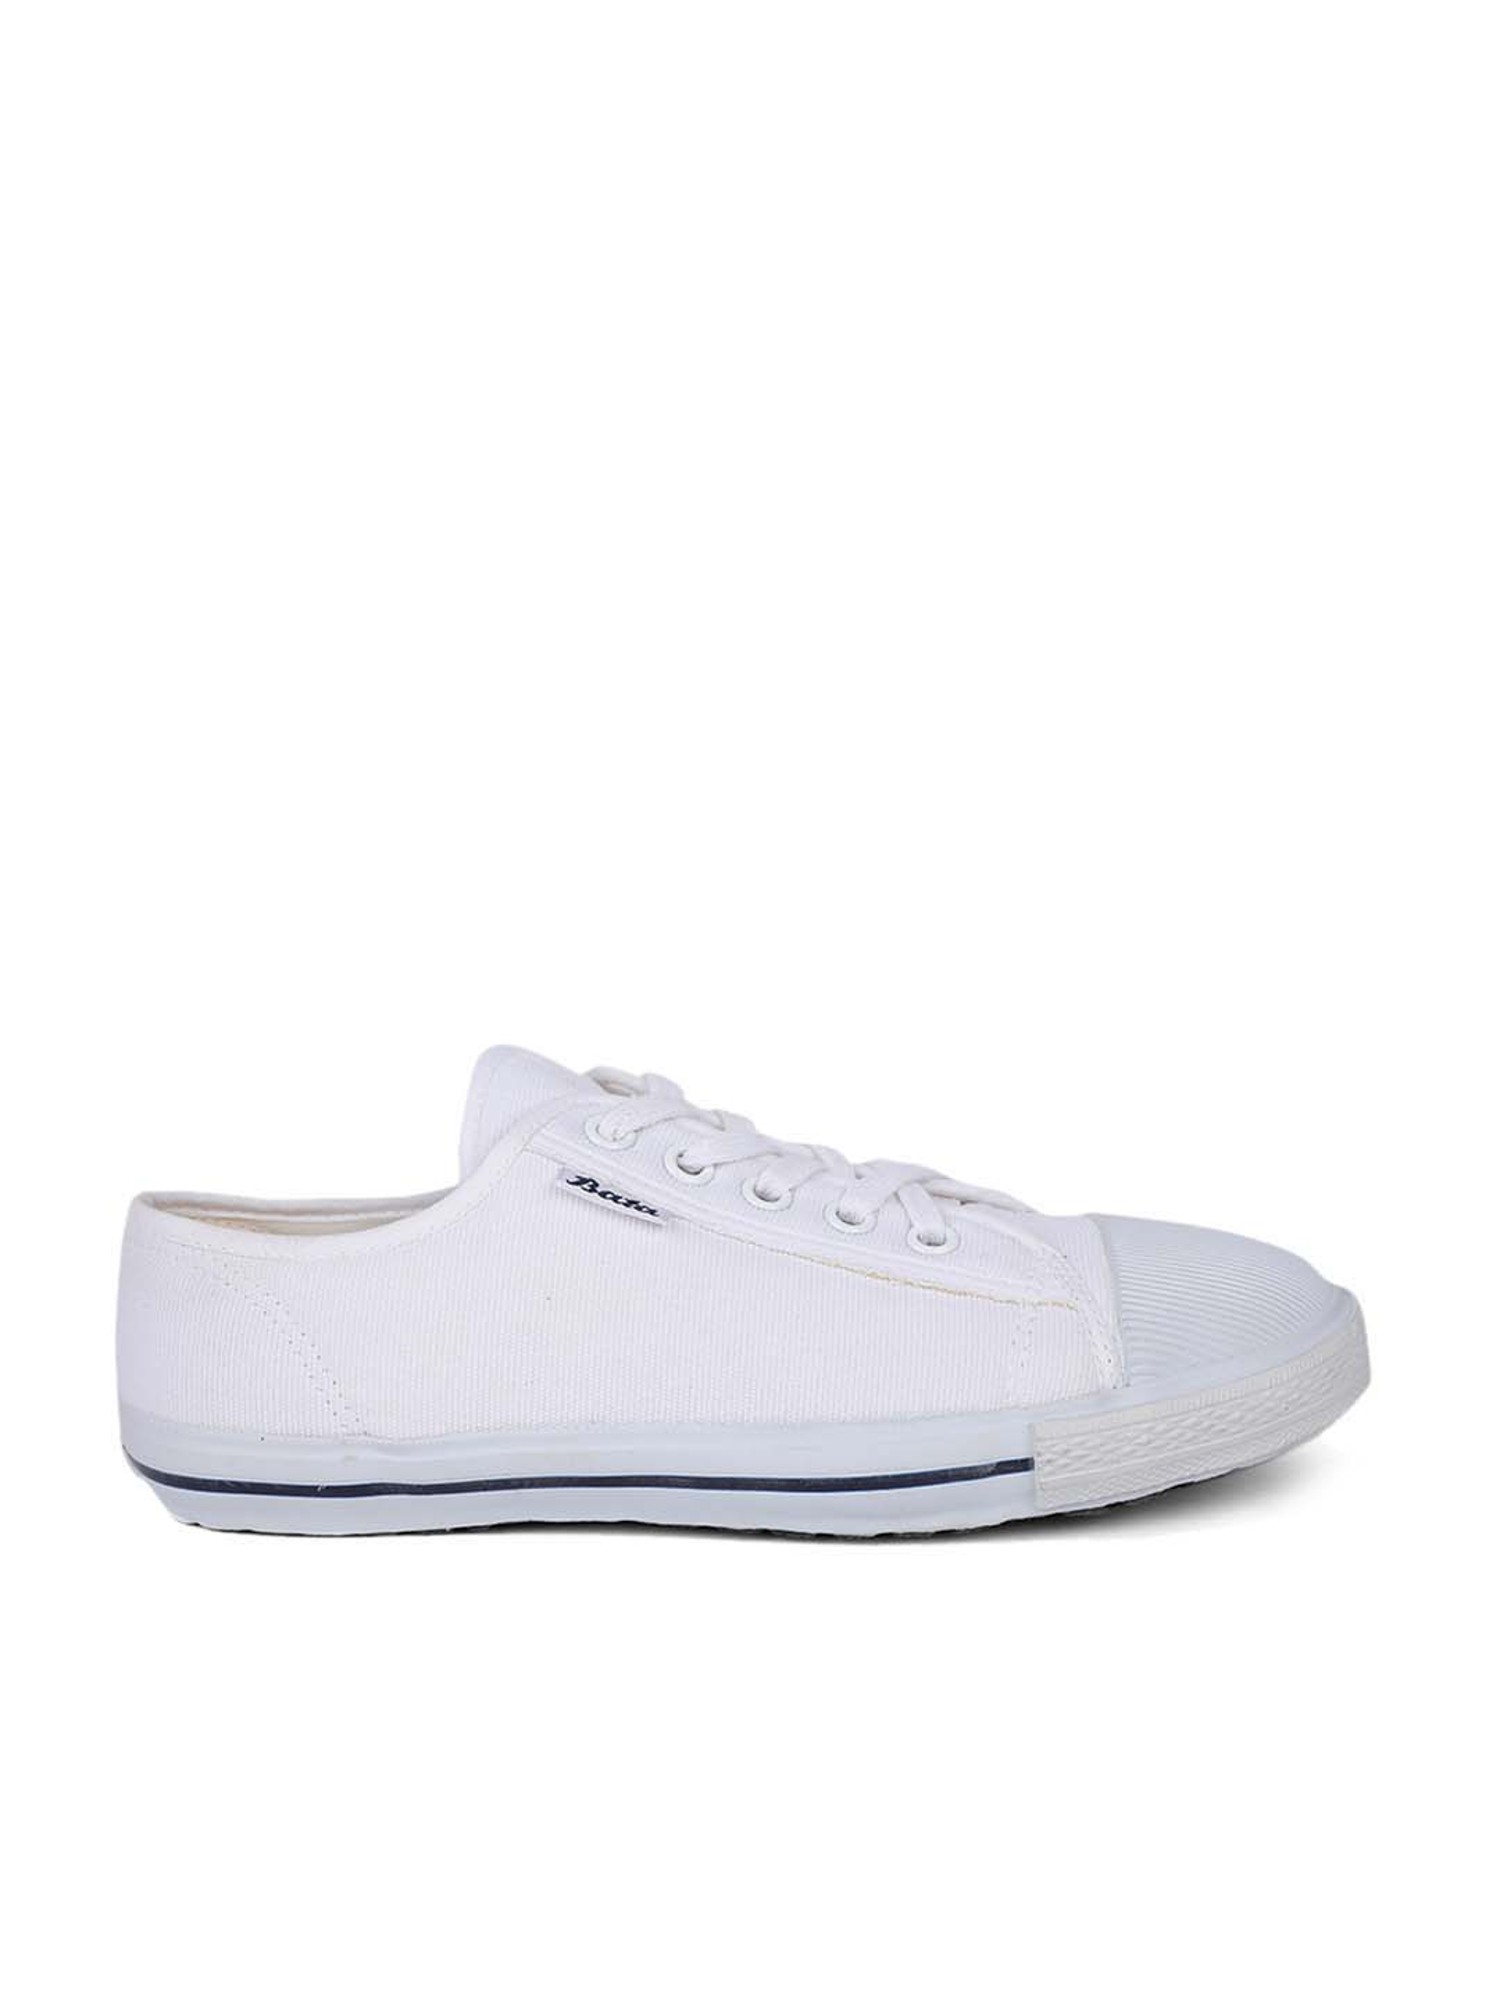 Kids white Bata Sneakers Shoes